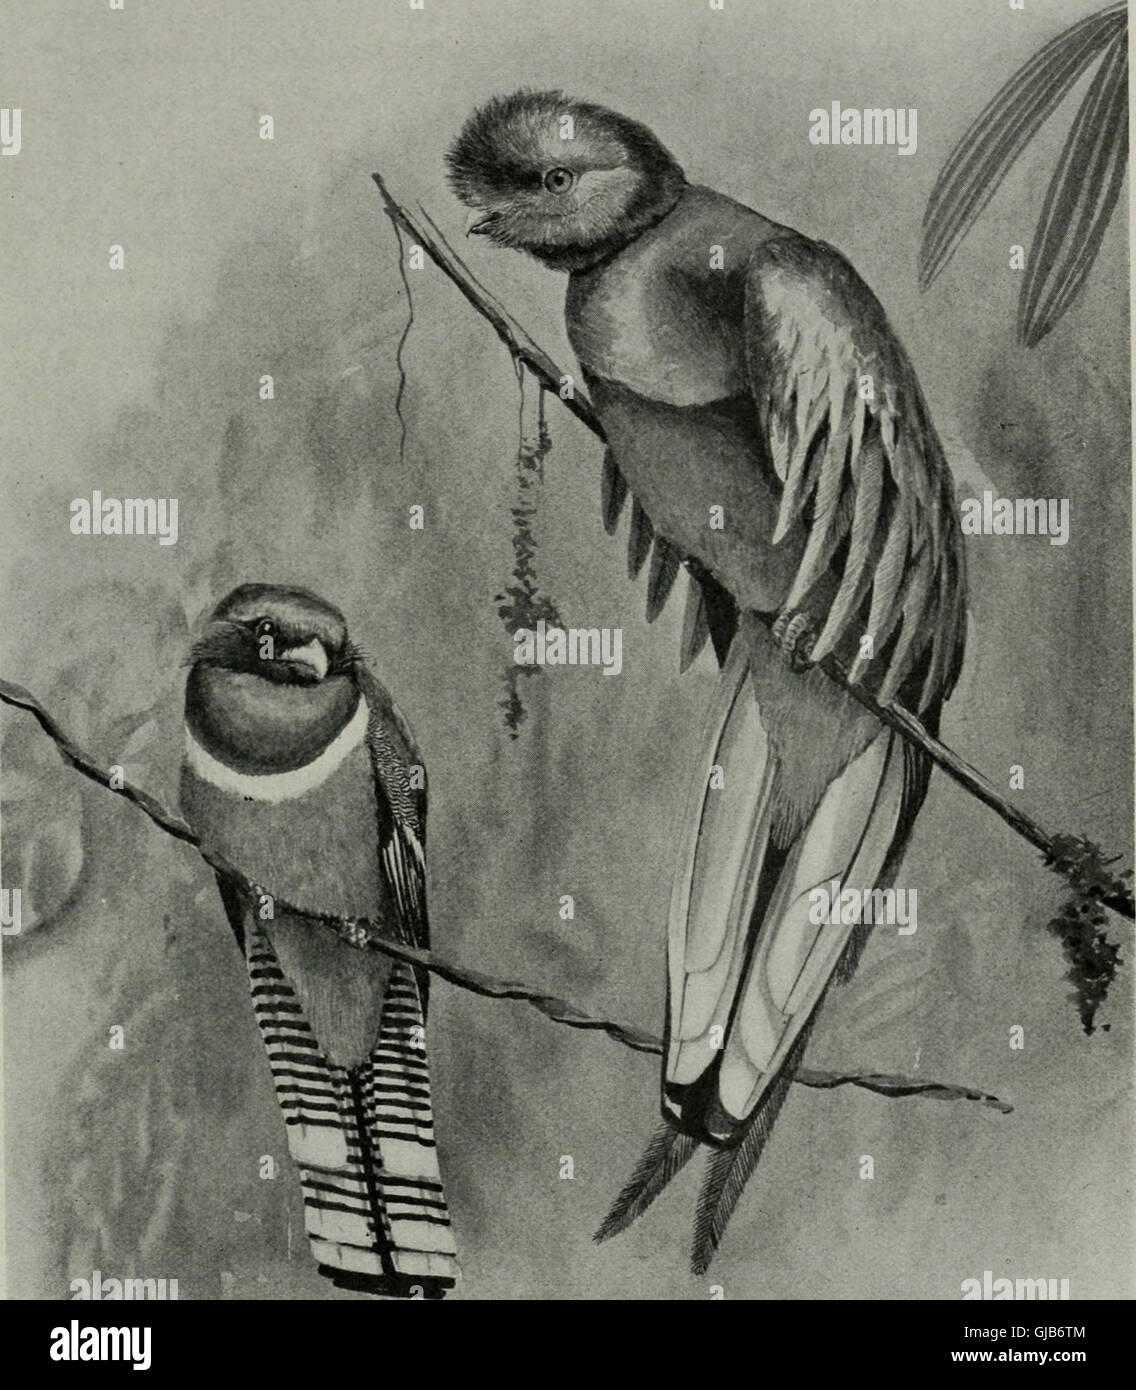 Bird-lore (1914) Stock Photo